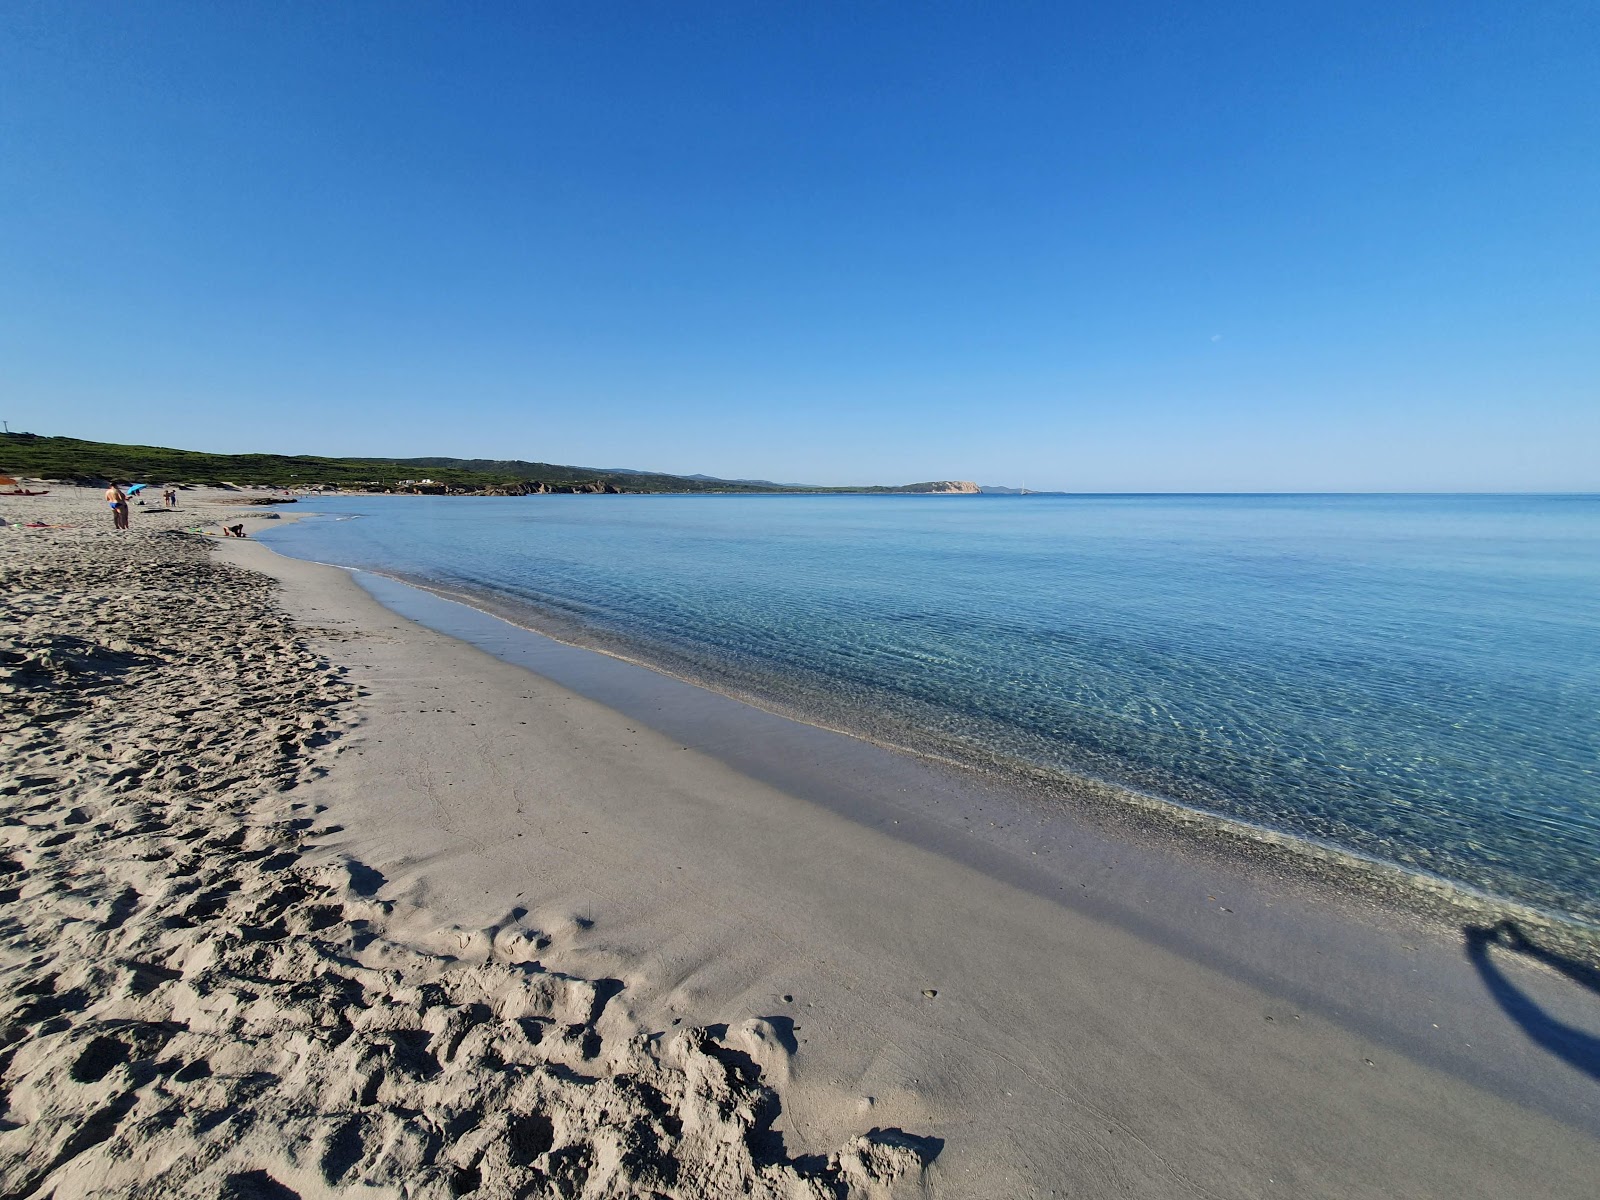 Foto de Spiaggia La Liccia com alto nível de limpeza